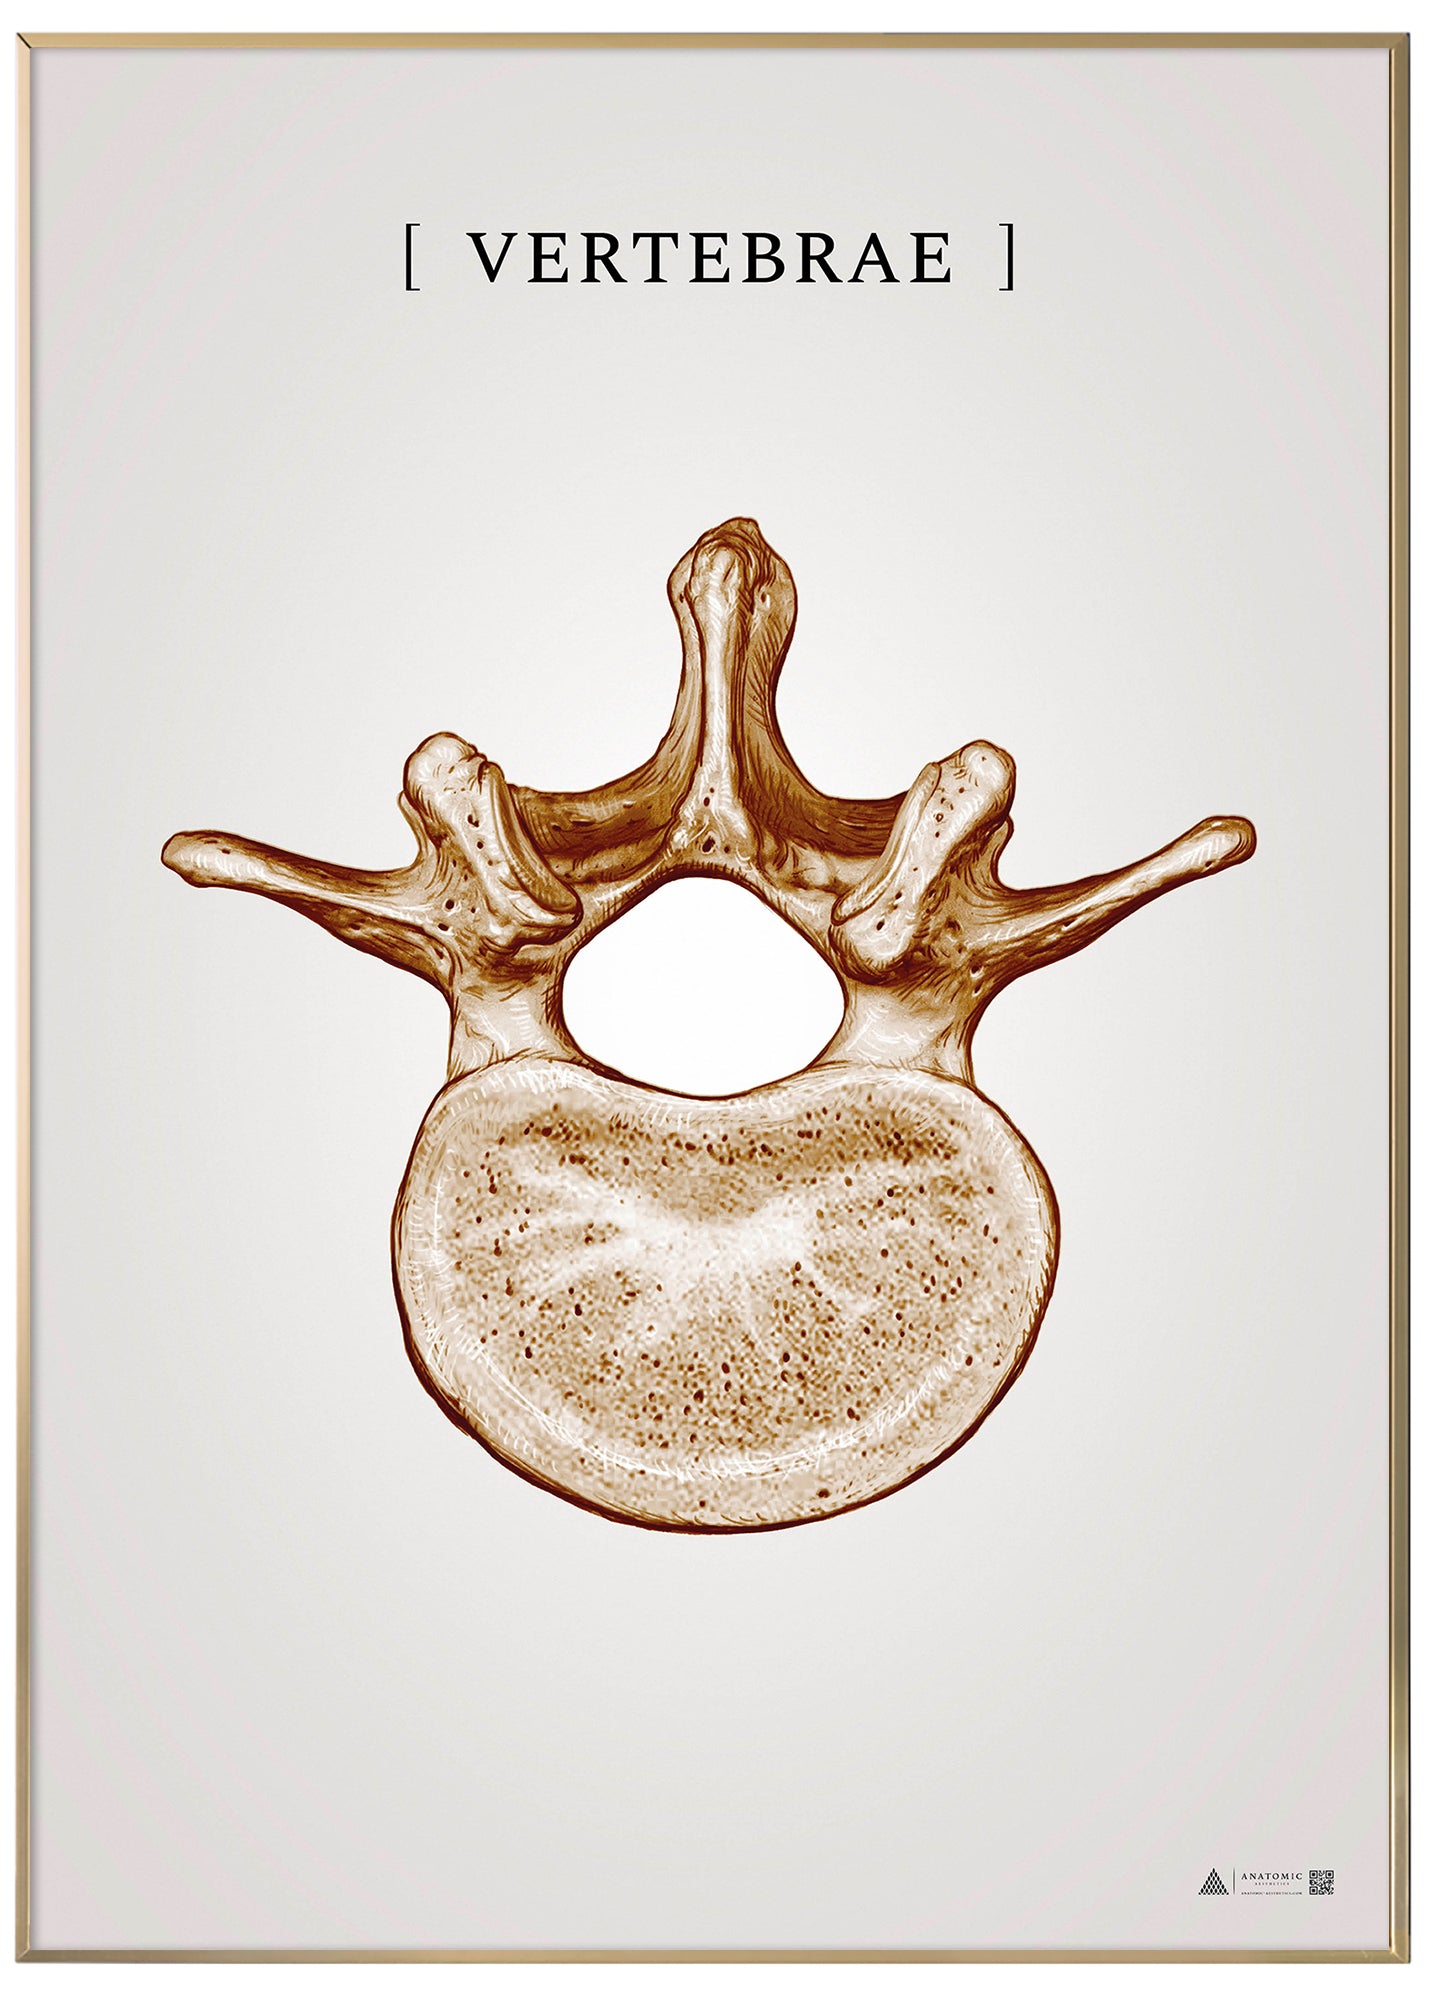 Burner vertebrae copper - anatomical art poster